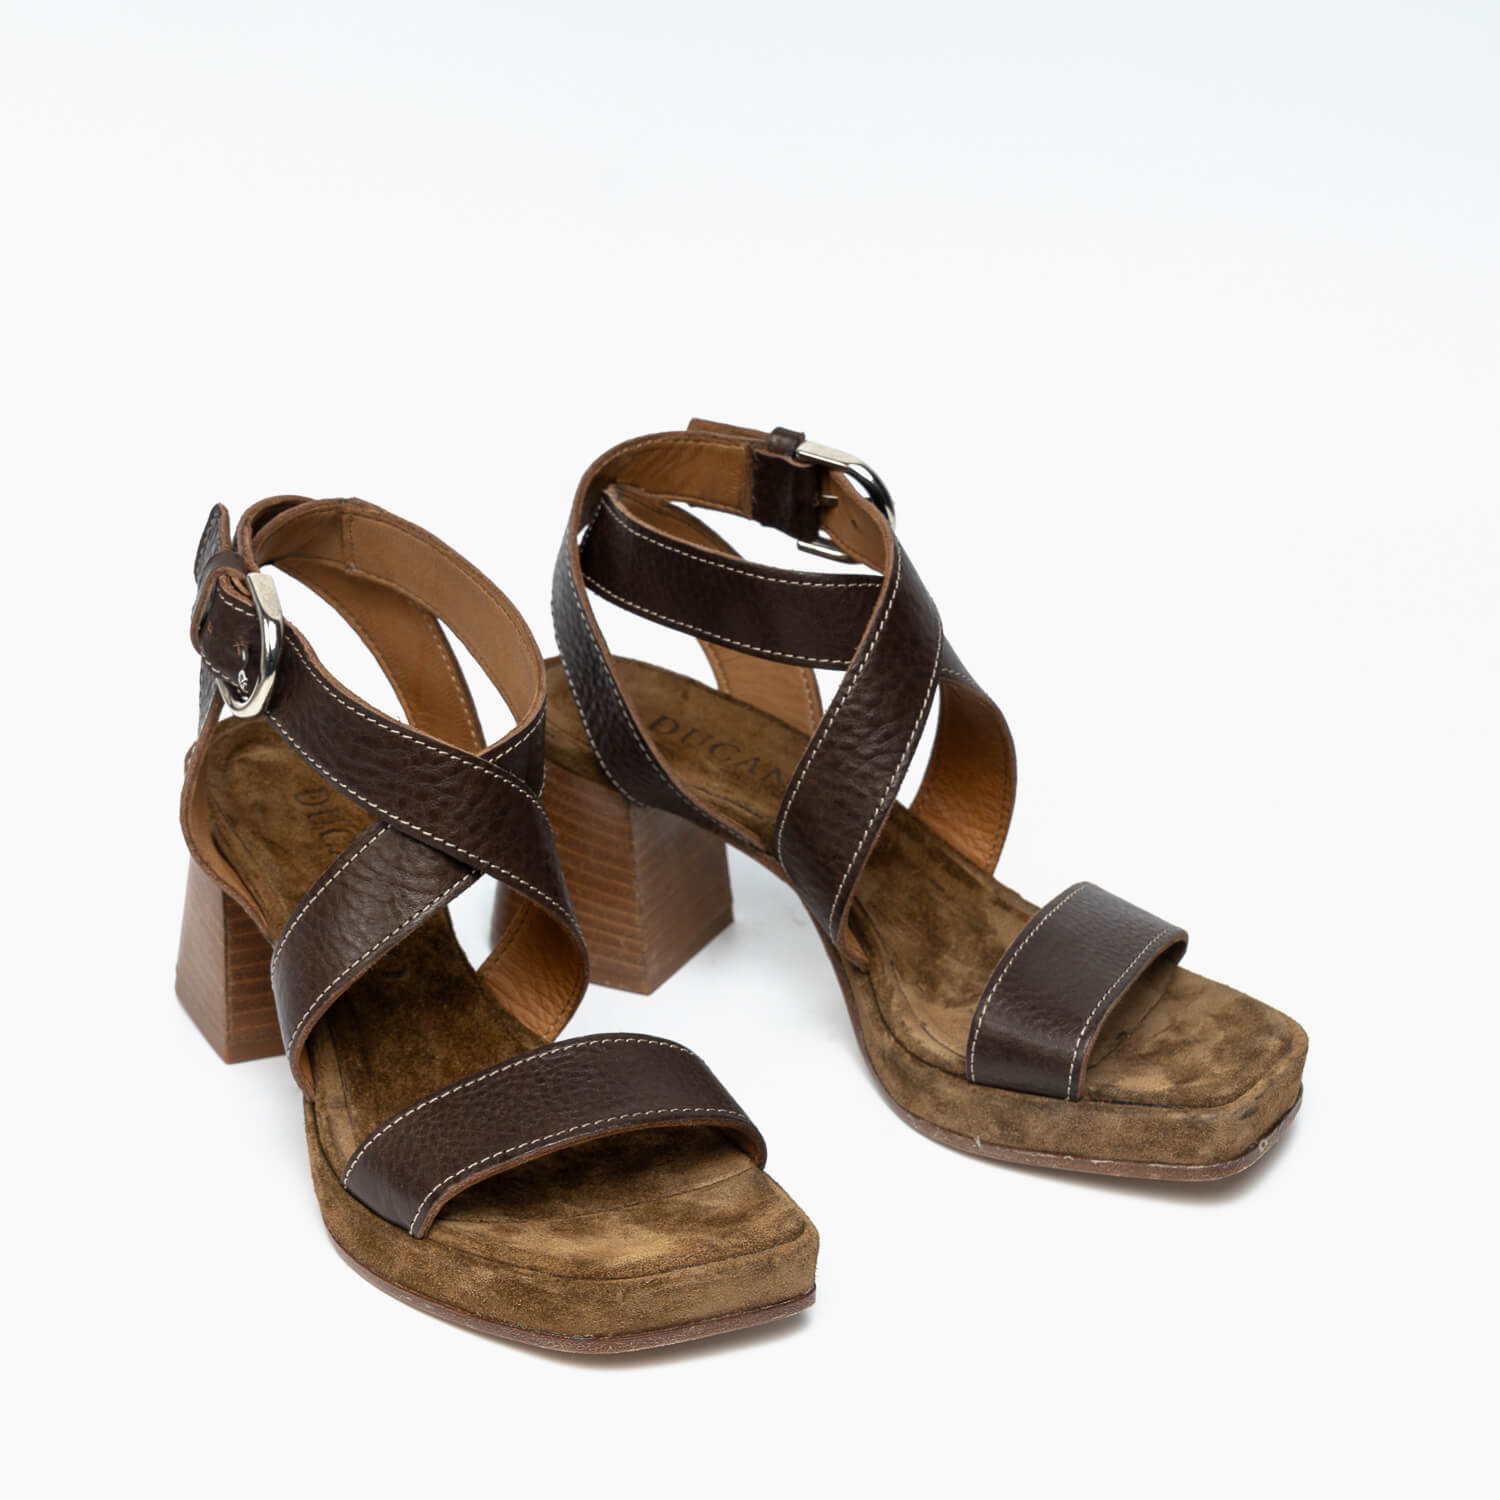 Bianca | Model 3789 sandals brown